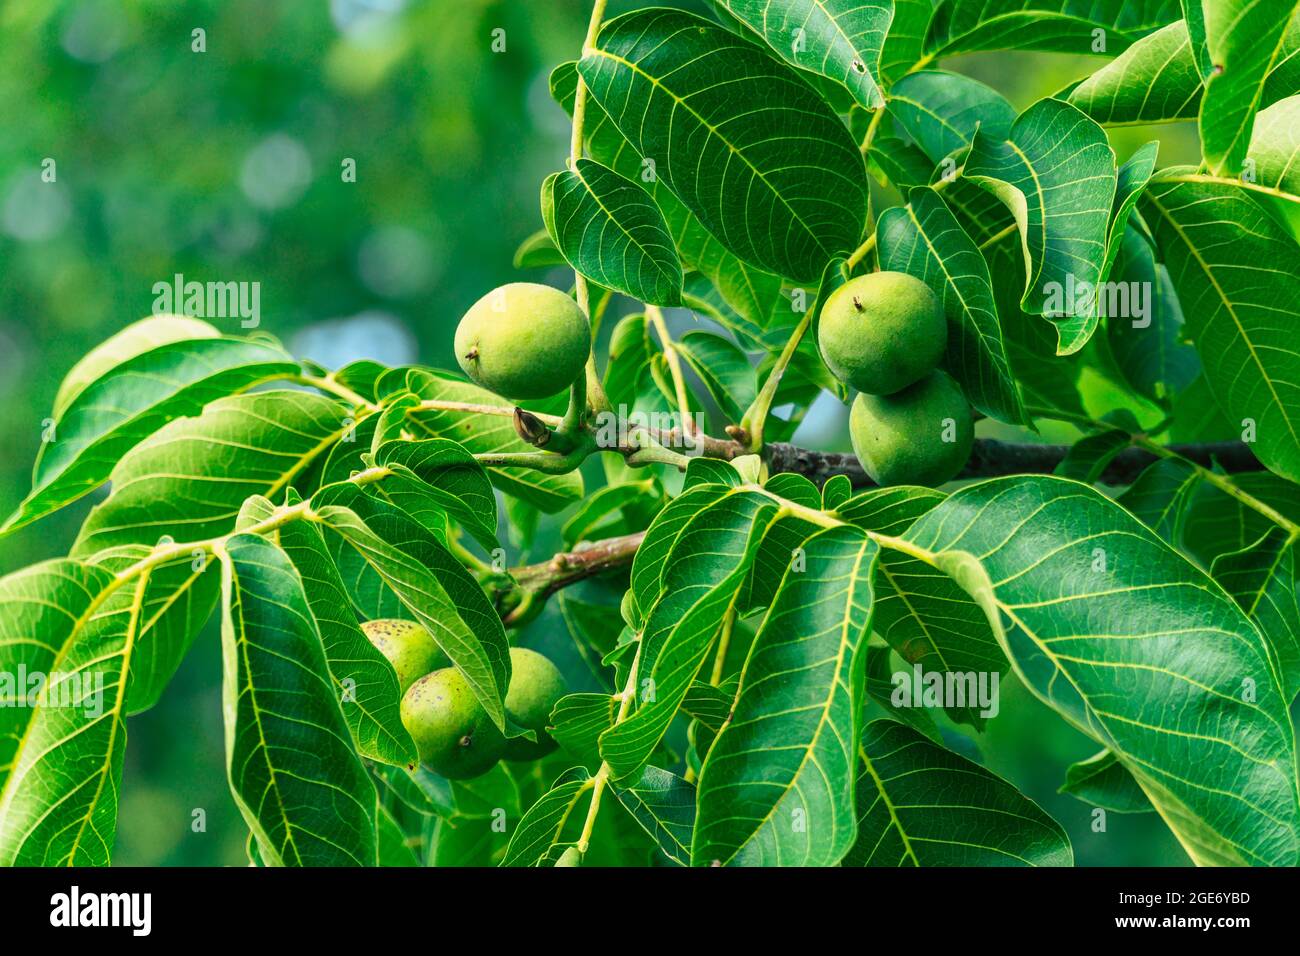 fresh green walnuts growing on a tree Stock Photo